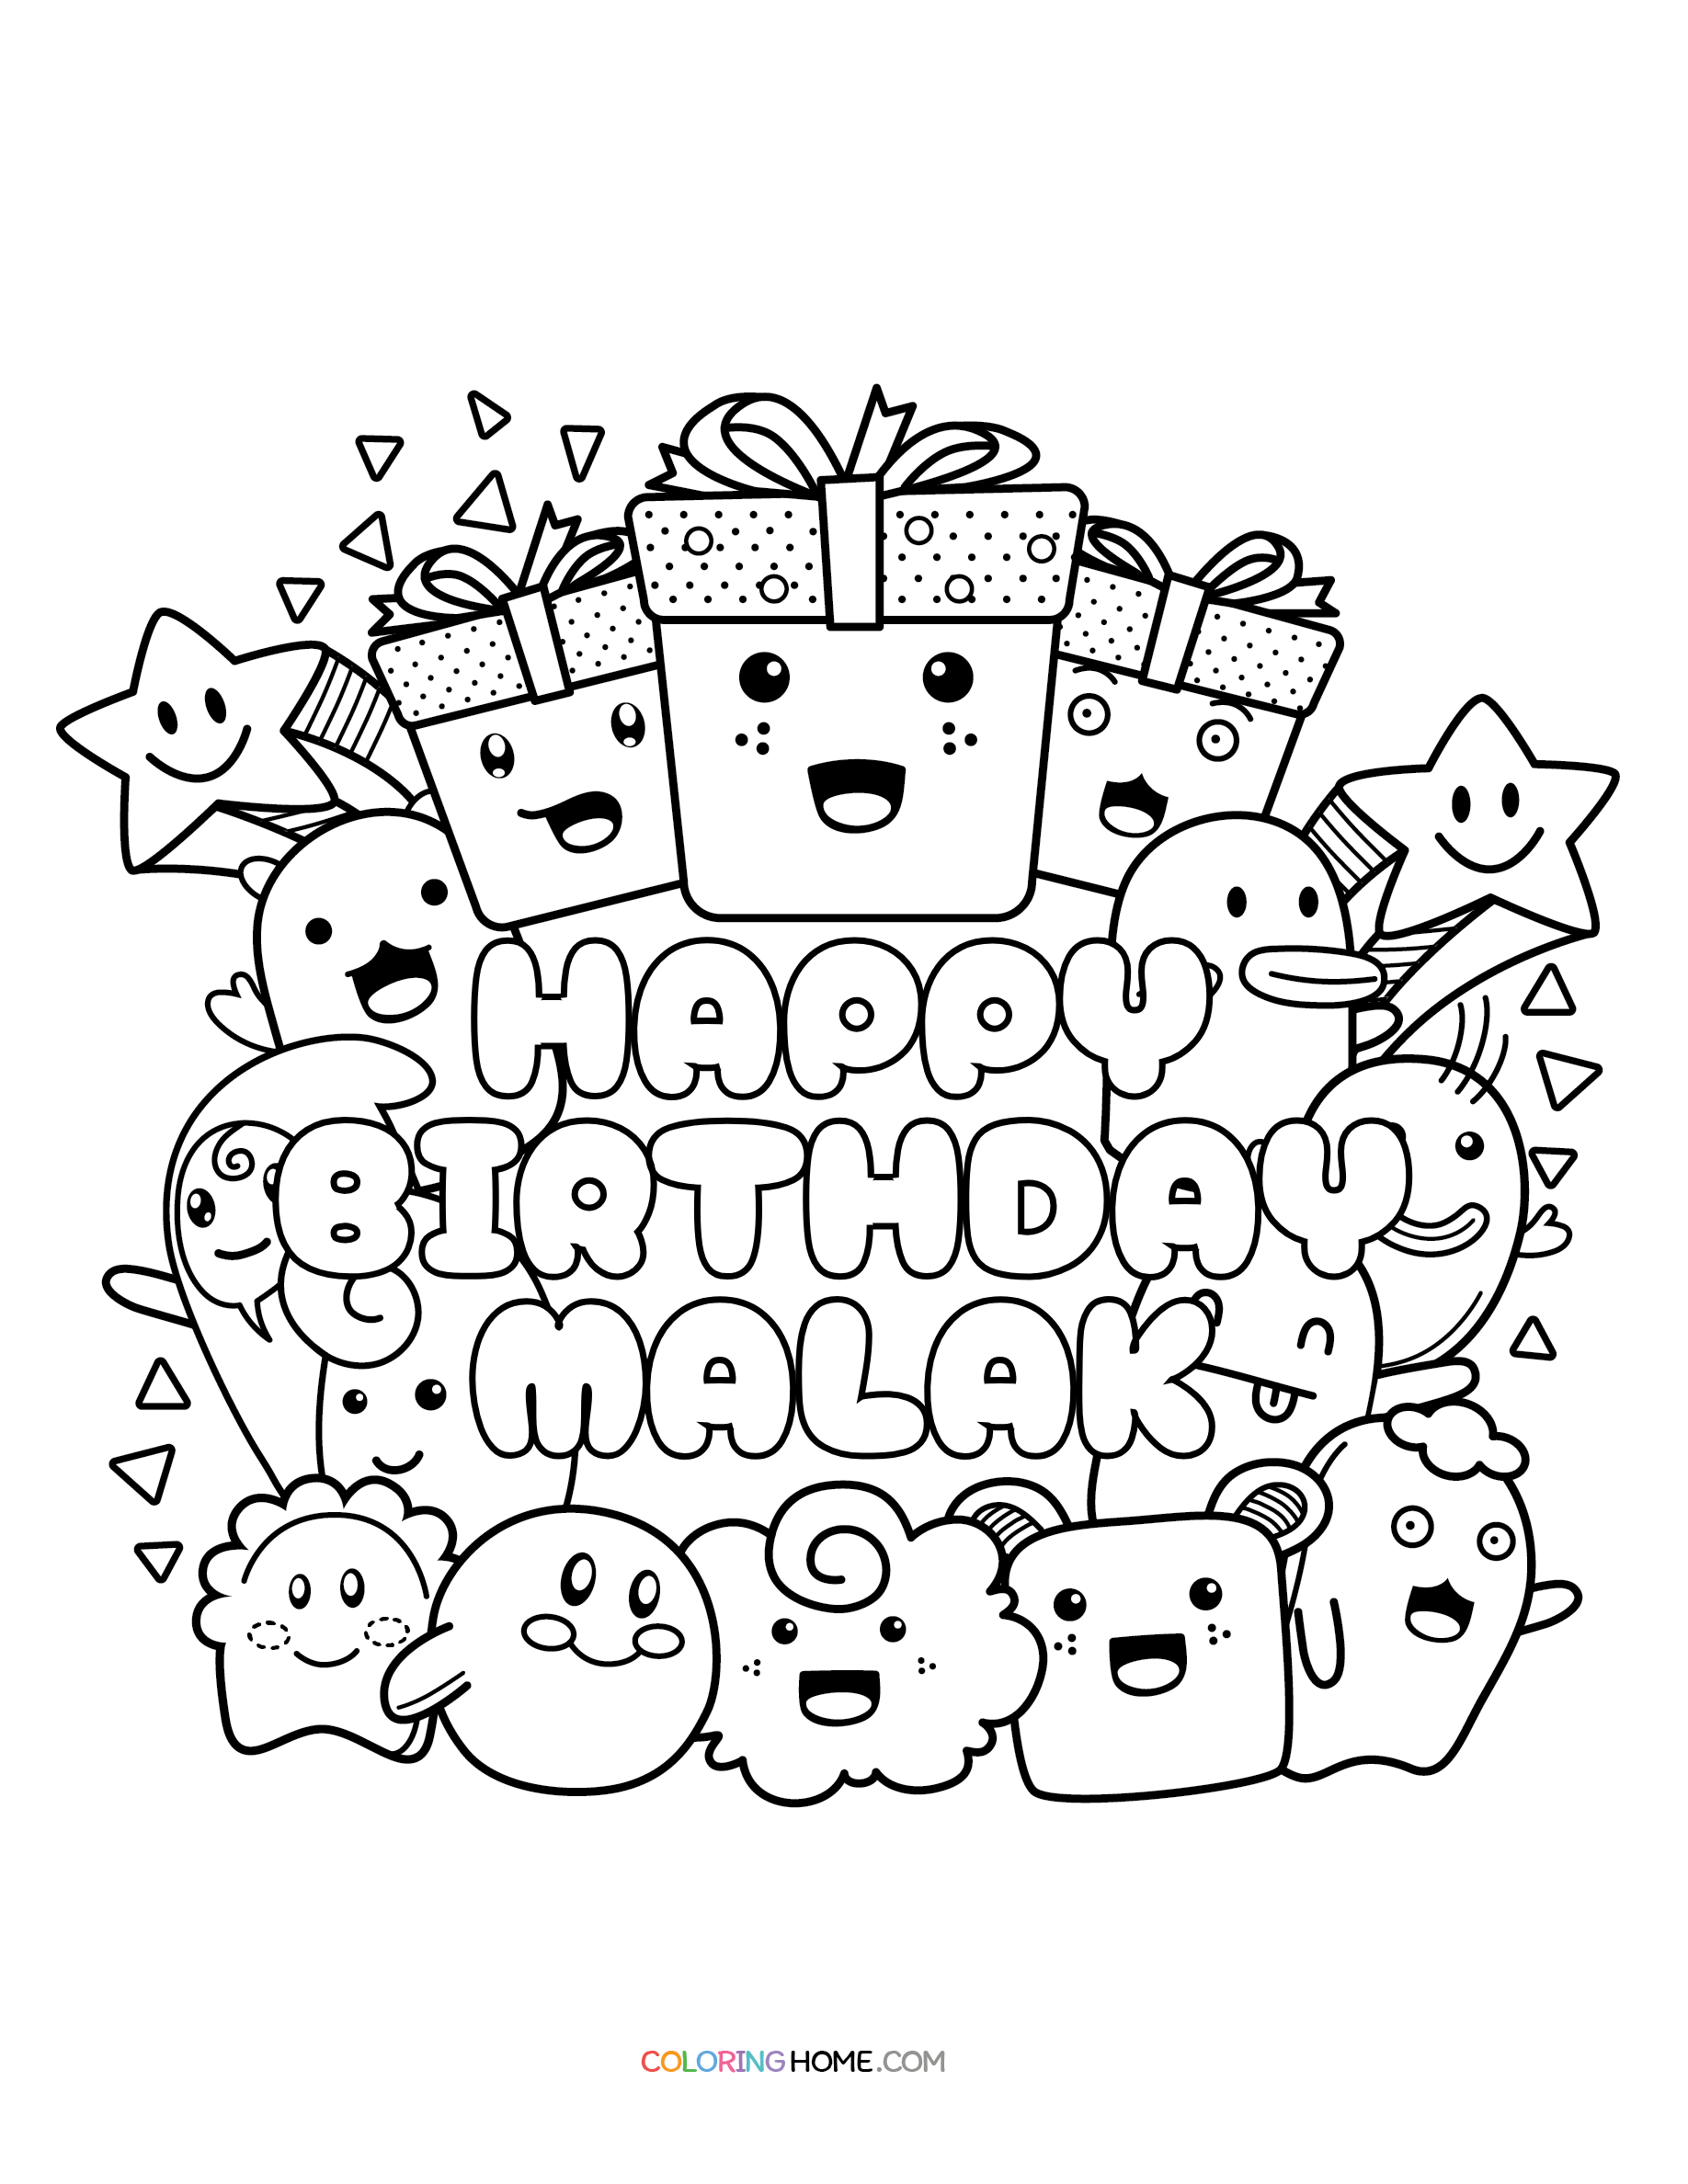 Happy Birthday Malak coloring page